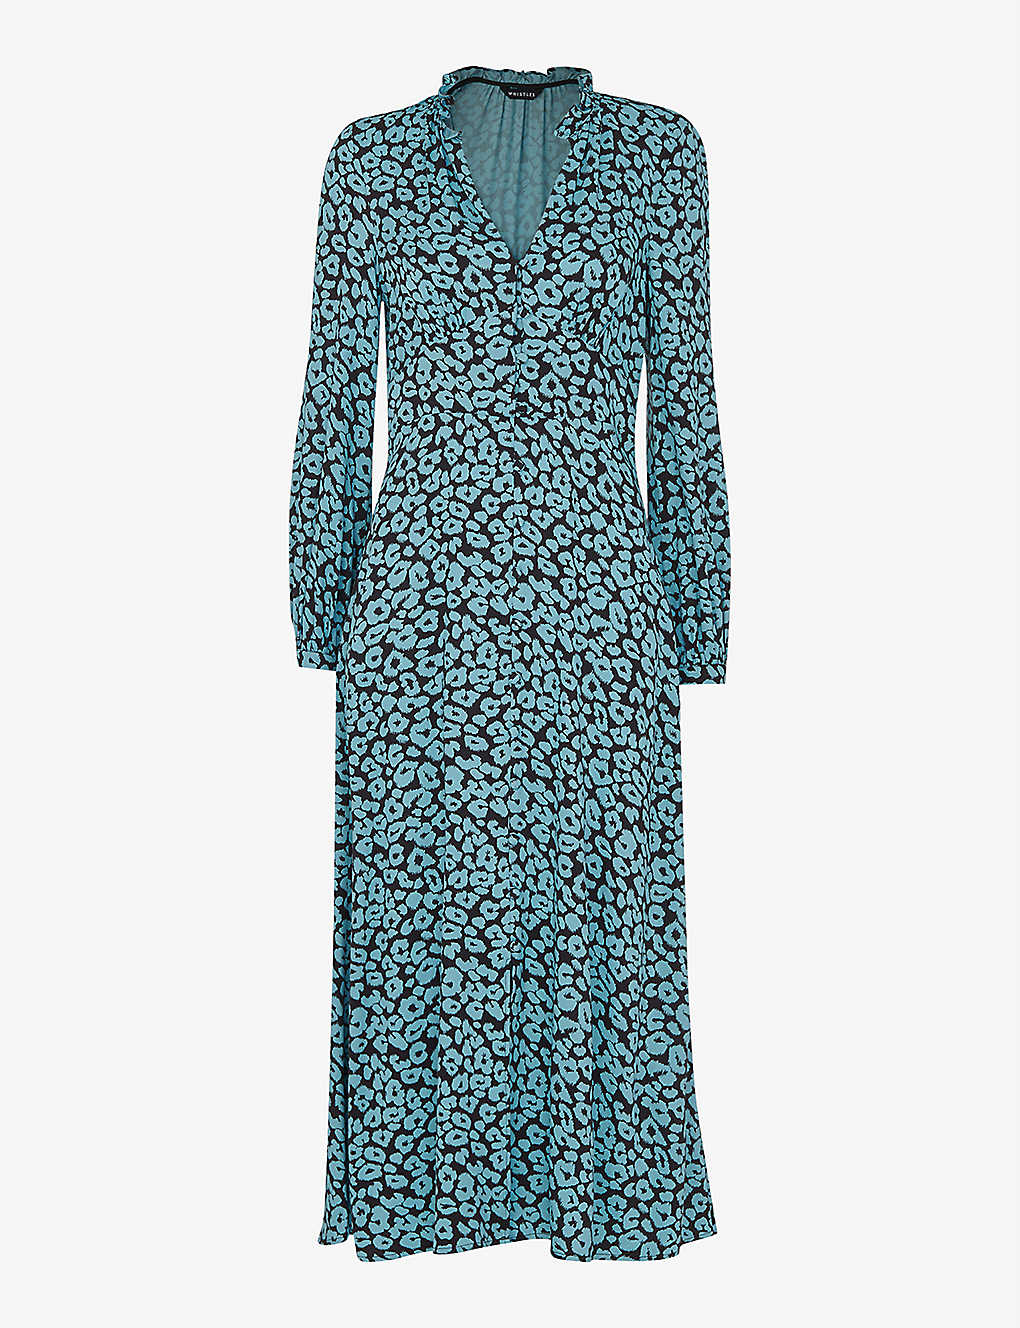 Whistles Leopard Print Midi Dress In Multi-coloured